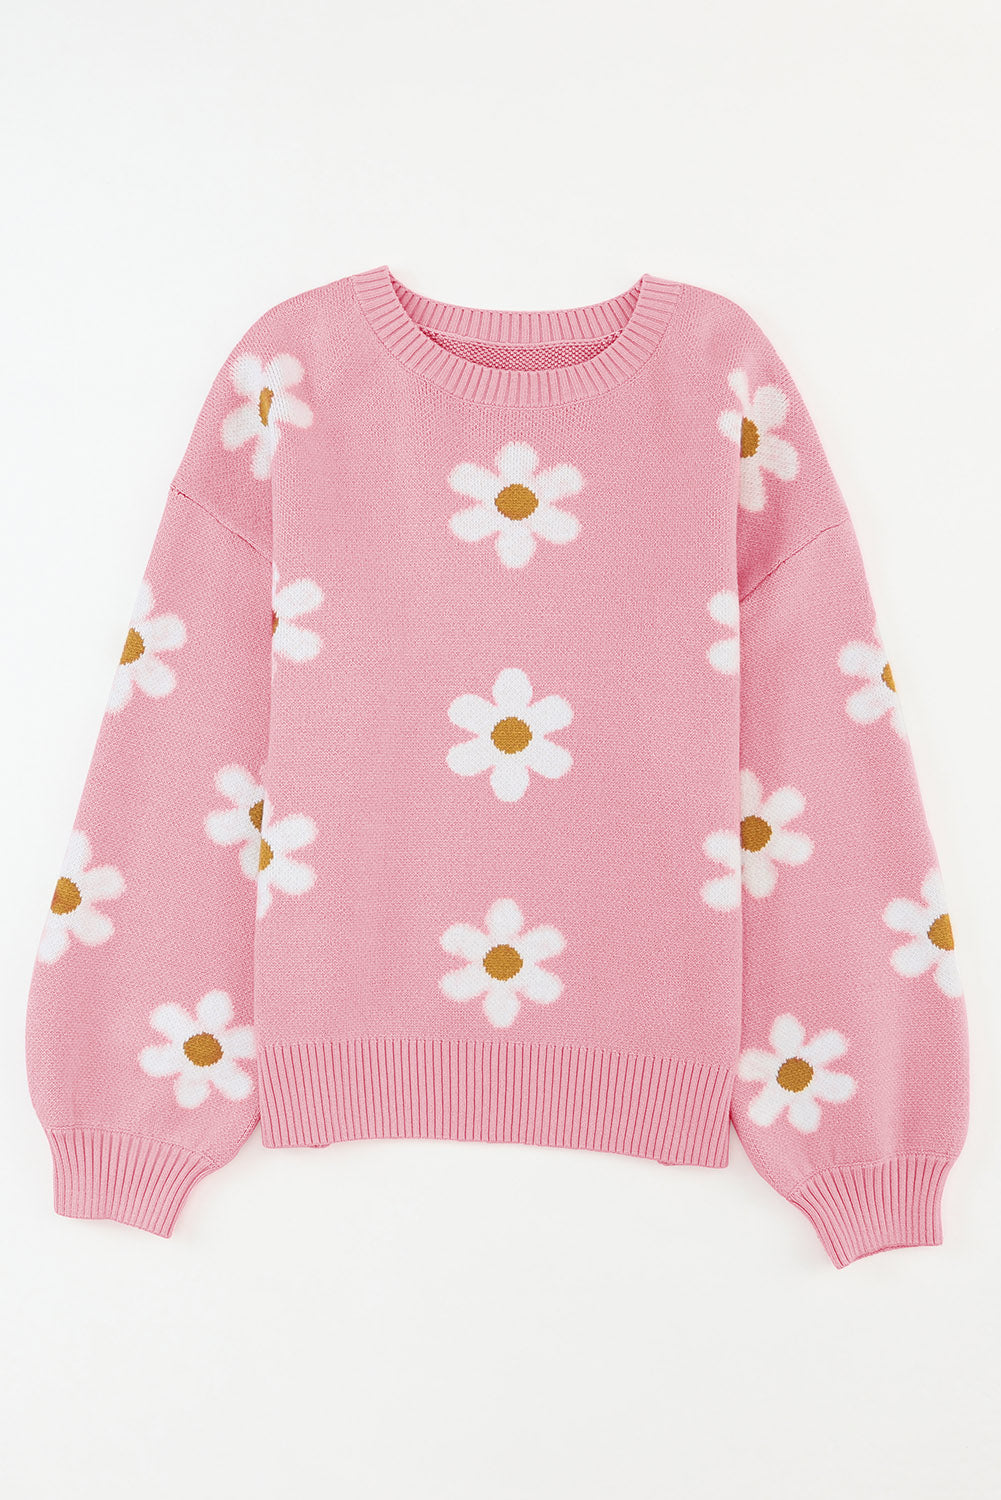 lennon flowr sweater - pink/black